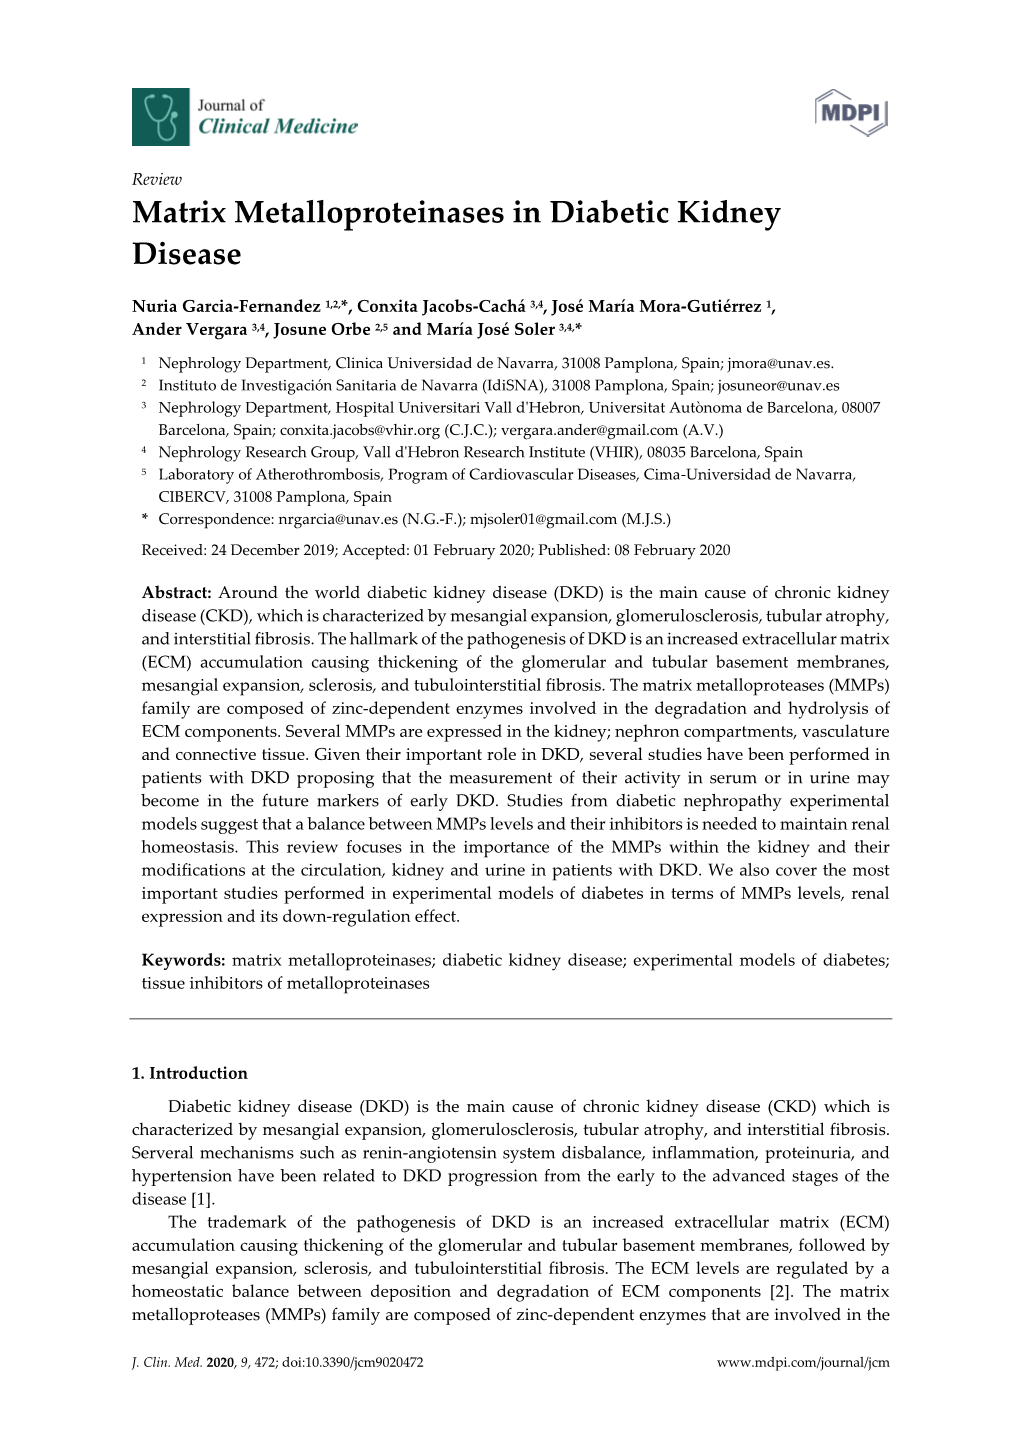 Matrix Metalloproteinases in Diabetic Kidney Disease